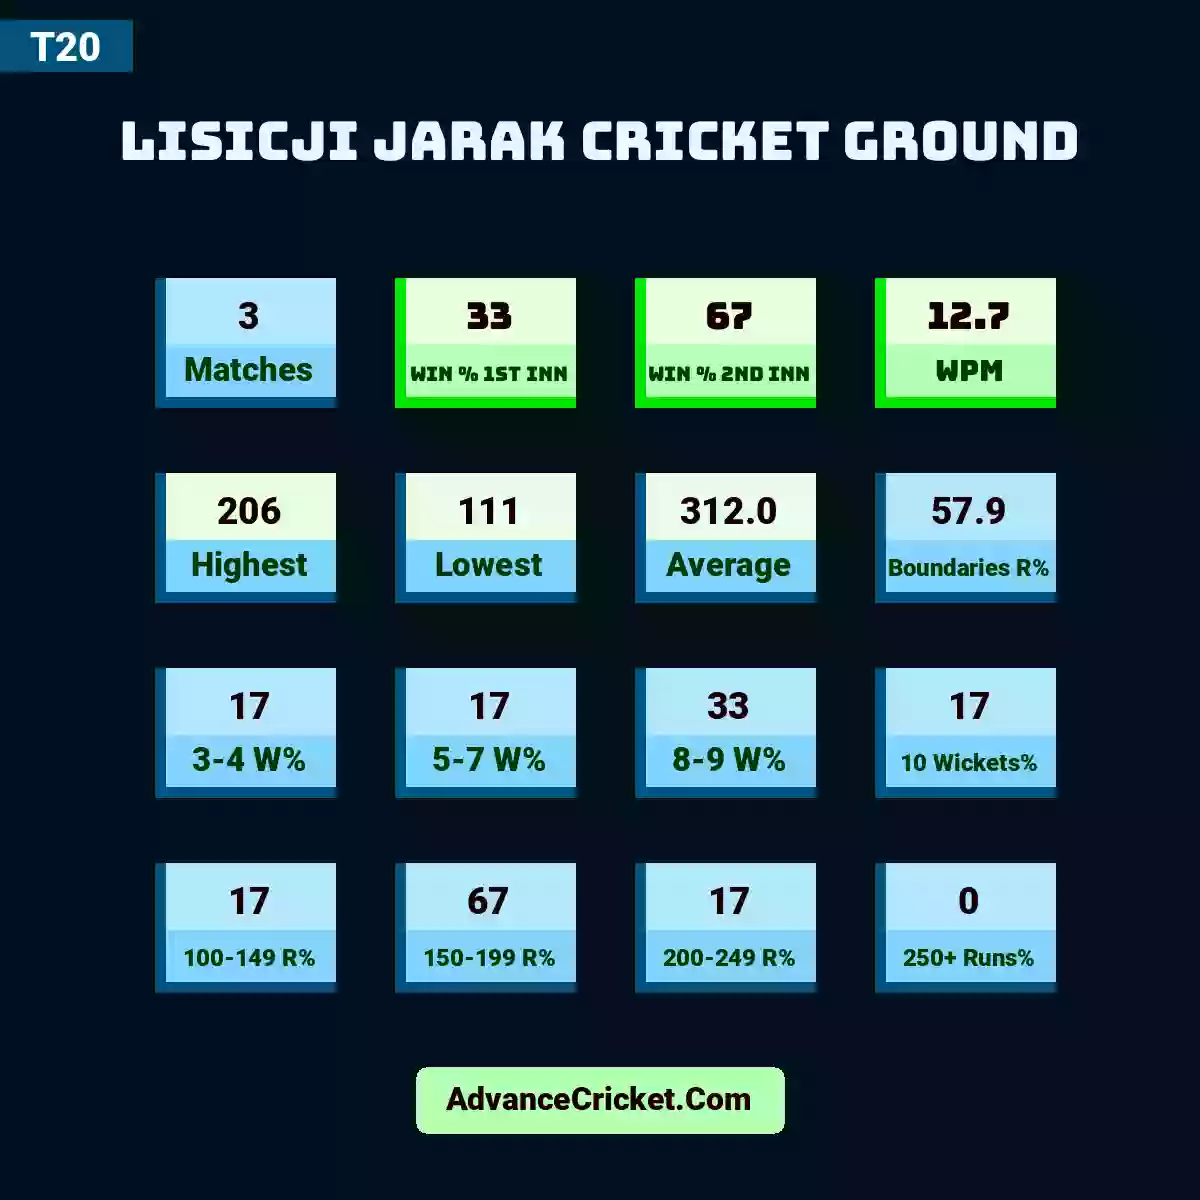 Image showing Lisicji Jarak Cricket Ground with Matches: 3, Win % 1st Inn: 33, Win % 2nd Inn: 67, WPM: 12.7, Highest: 206, Lowest: 111, Average: 312.0, Boundaries R%: 57.9, 3-4 W%: 17, 5-7 W%: 17, 8-9 W%: 33, 10 Wickets%: 17, 100-149 R%: 17, 150-199 R%: 67, 200-249 R%: 17, 250+ Runs%: 0.